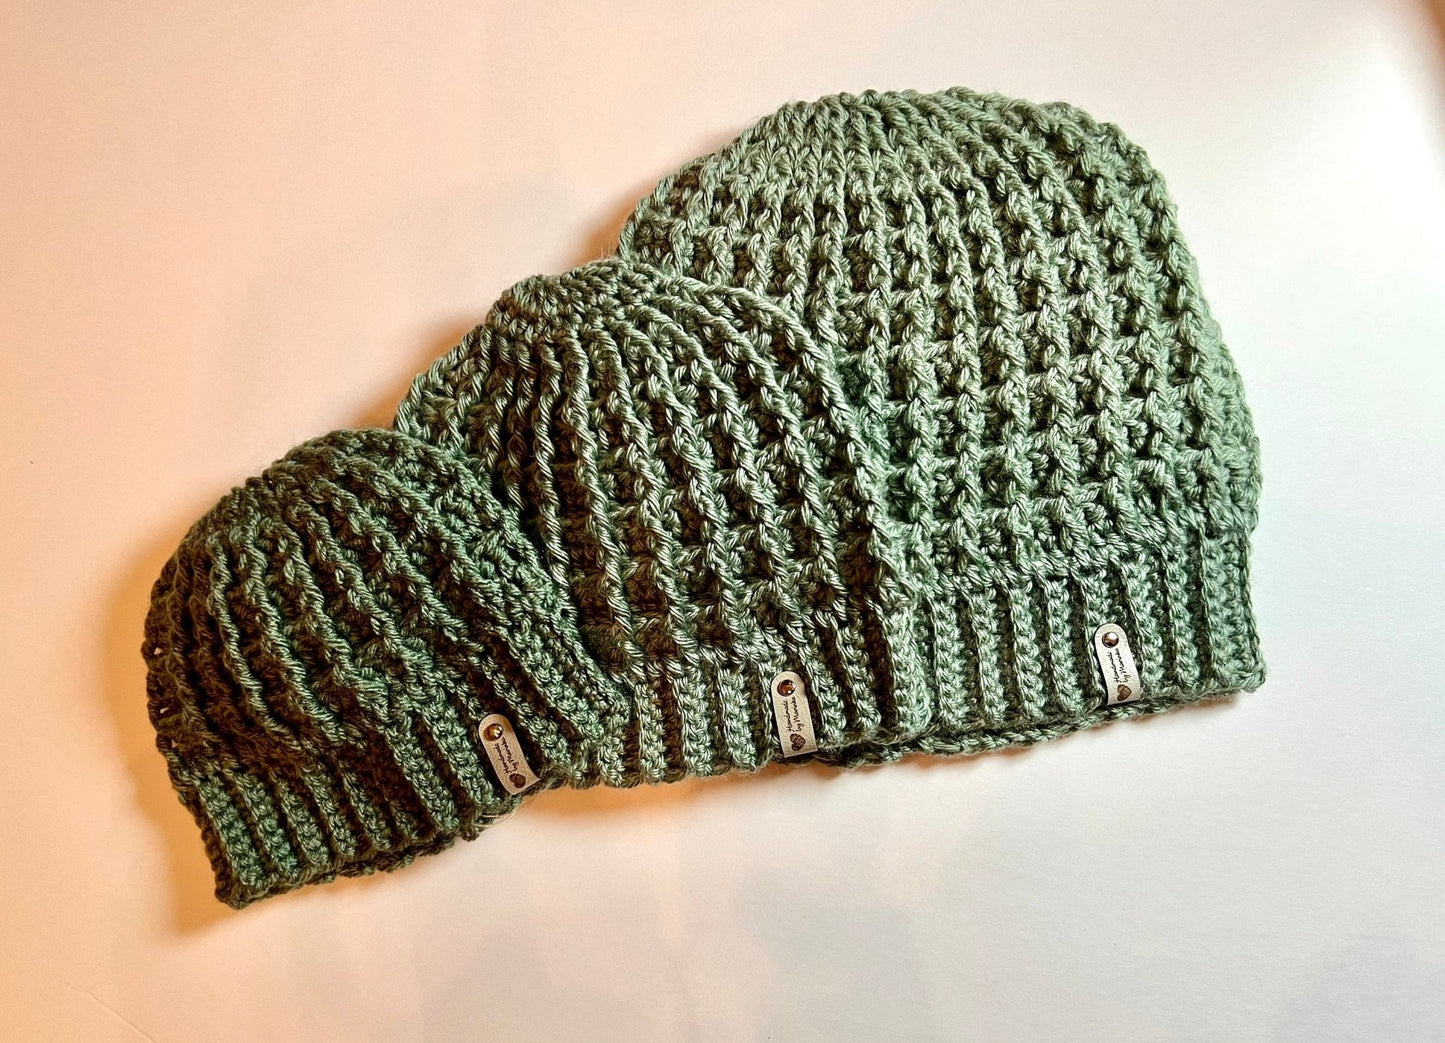 Handmade crochet hat, adult size, light sage green color - Lilly Grace Sparkle Boutique